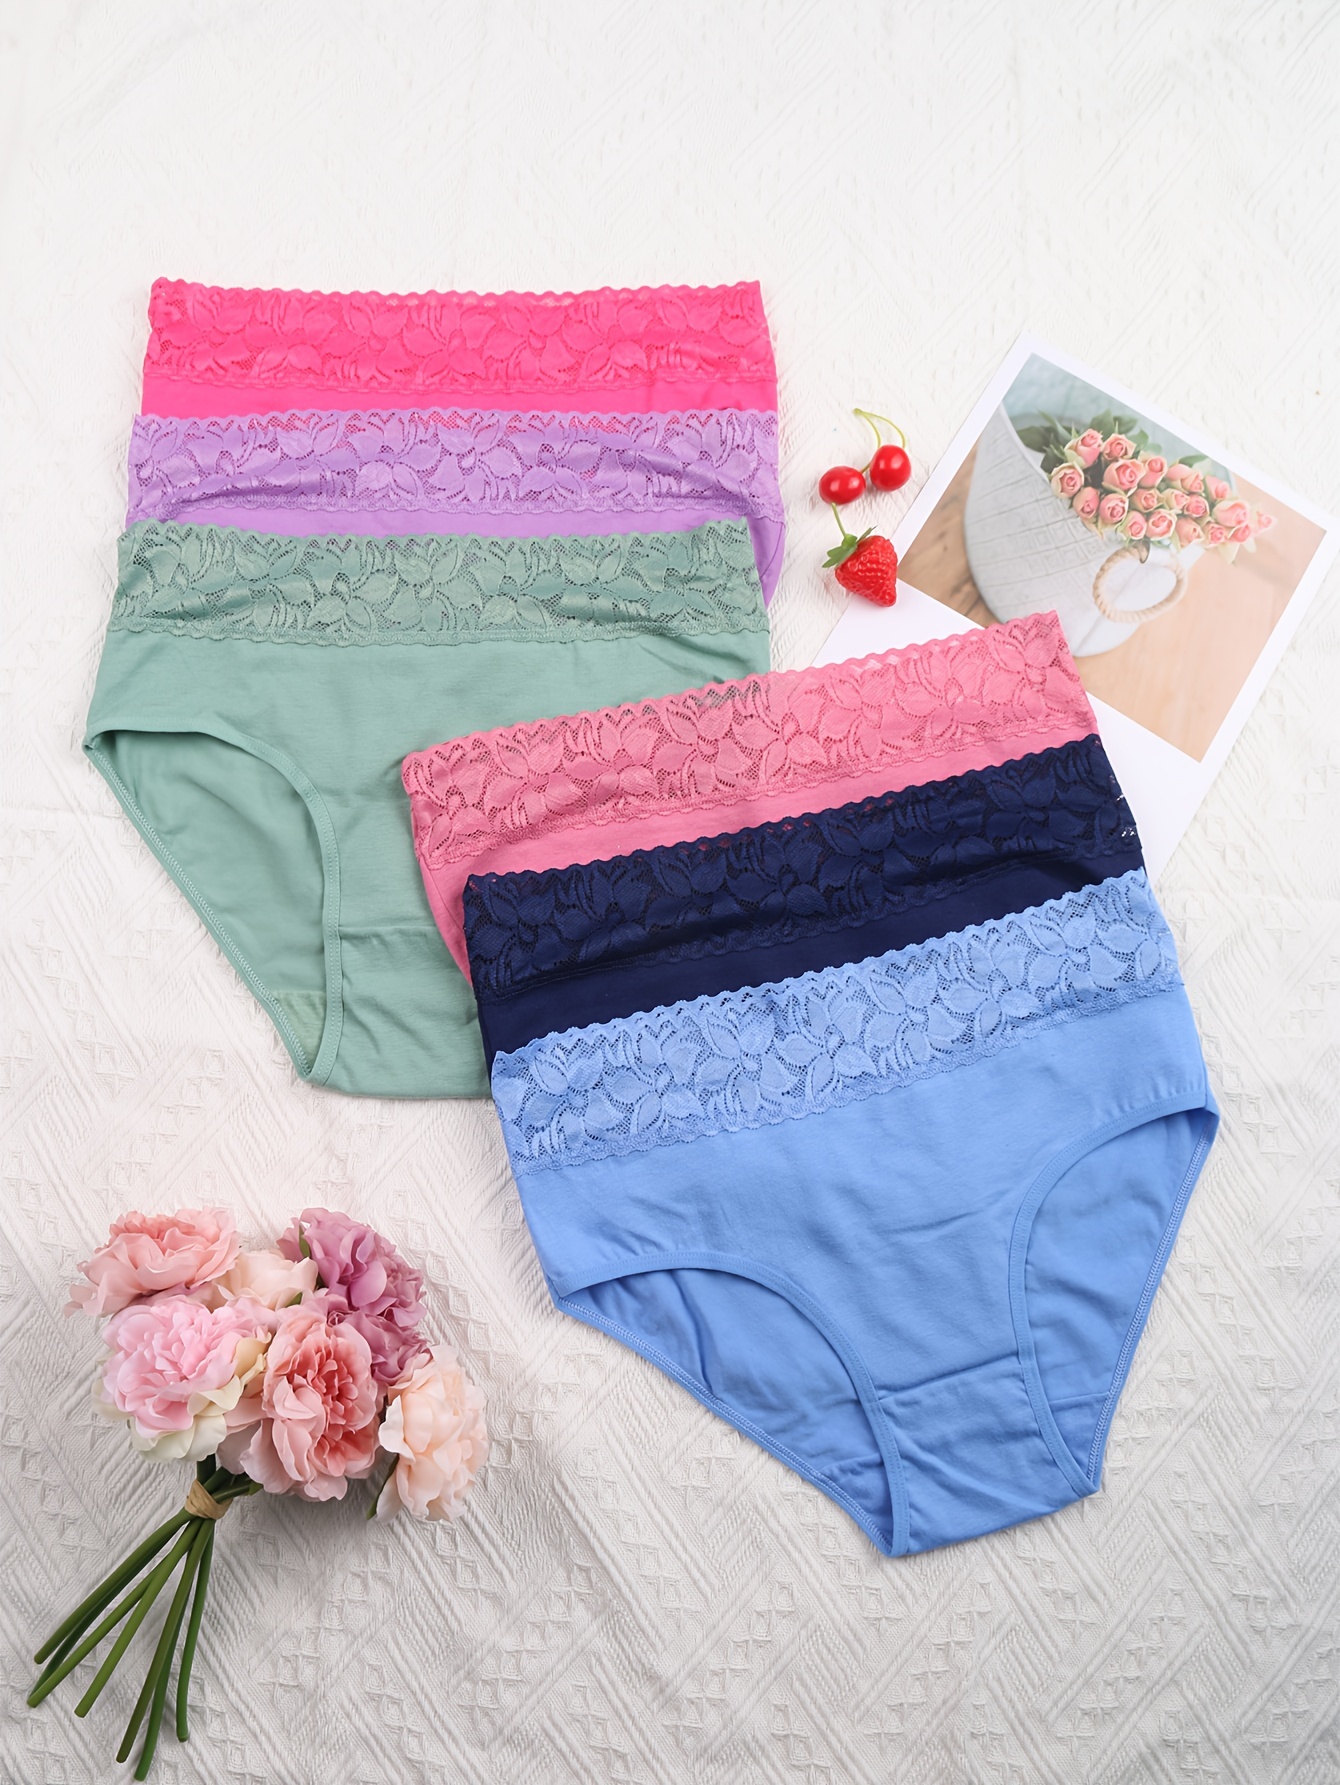 4pcs Colorblock Briefs, Comfy & Breathable Stretchy Intimates Panties,  Women's Lingerie & Underwear